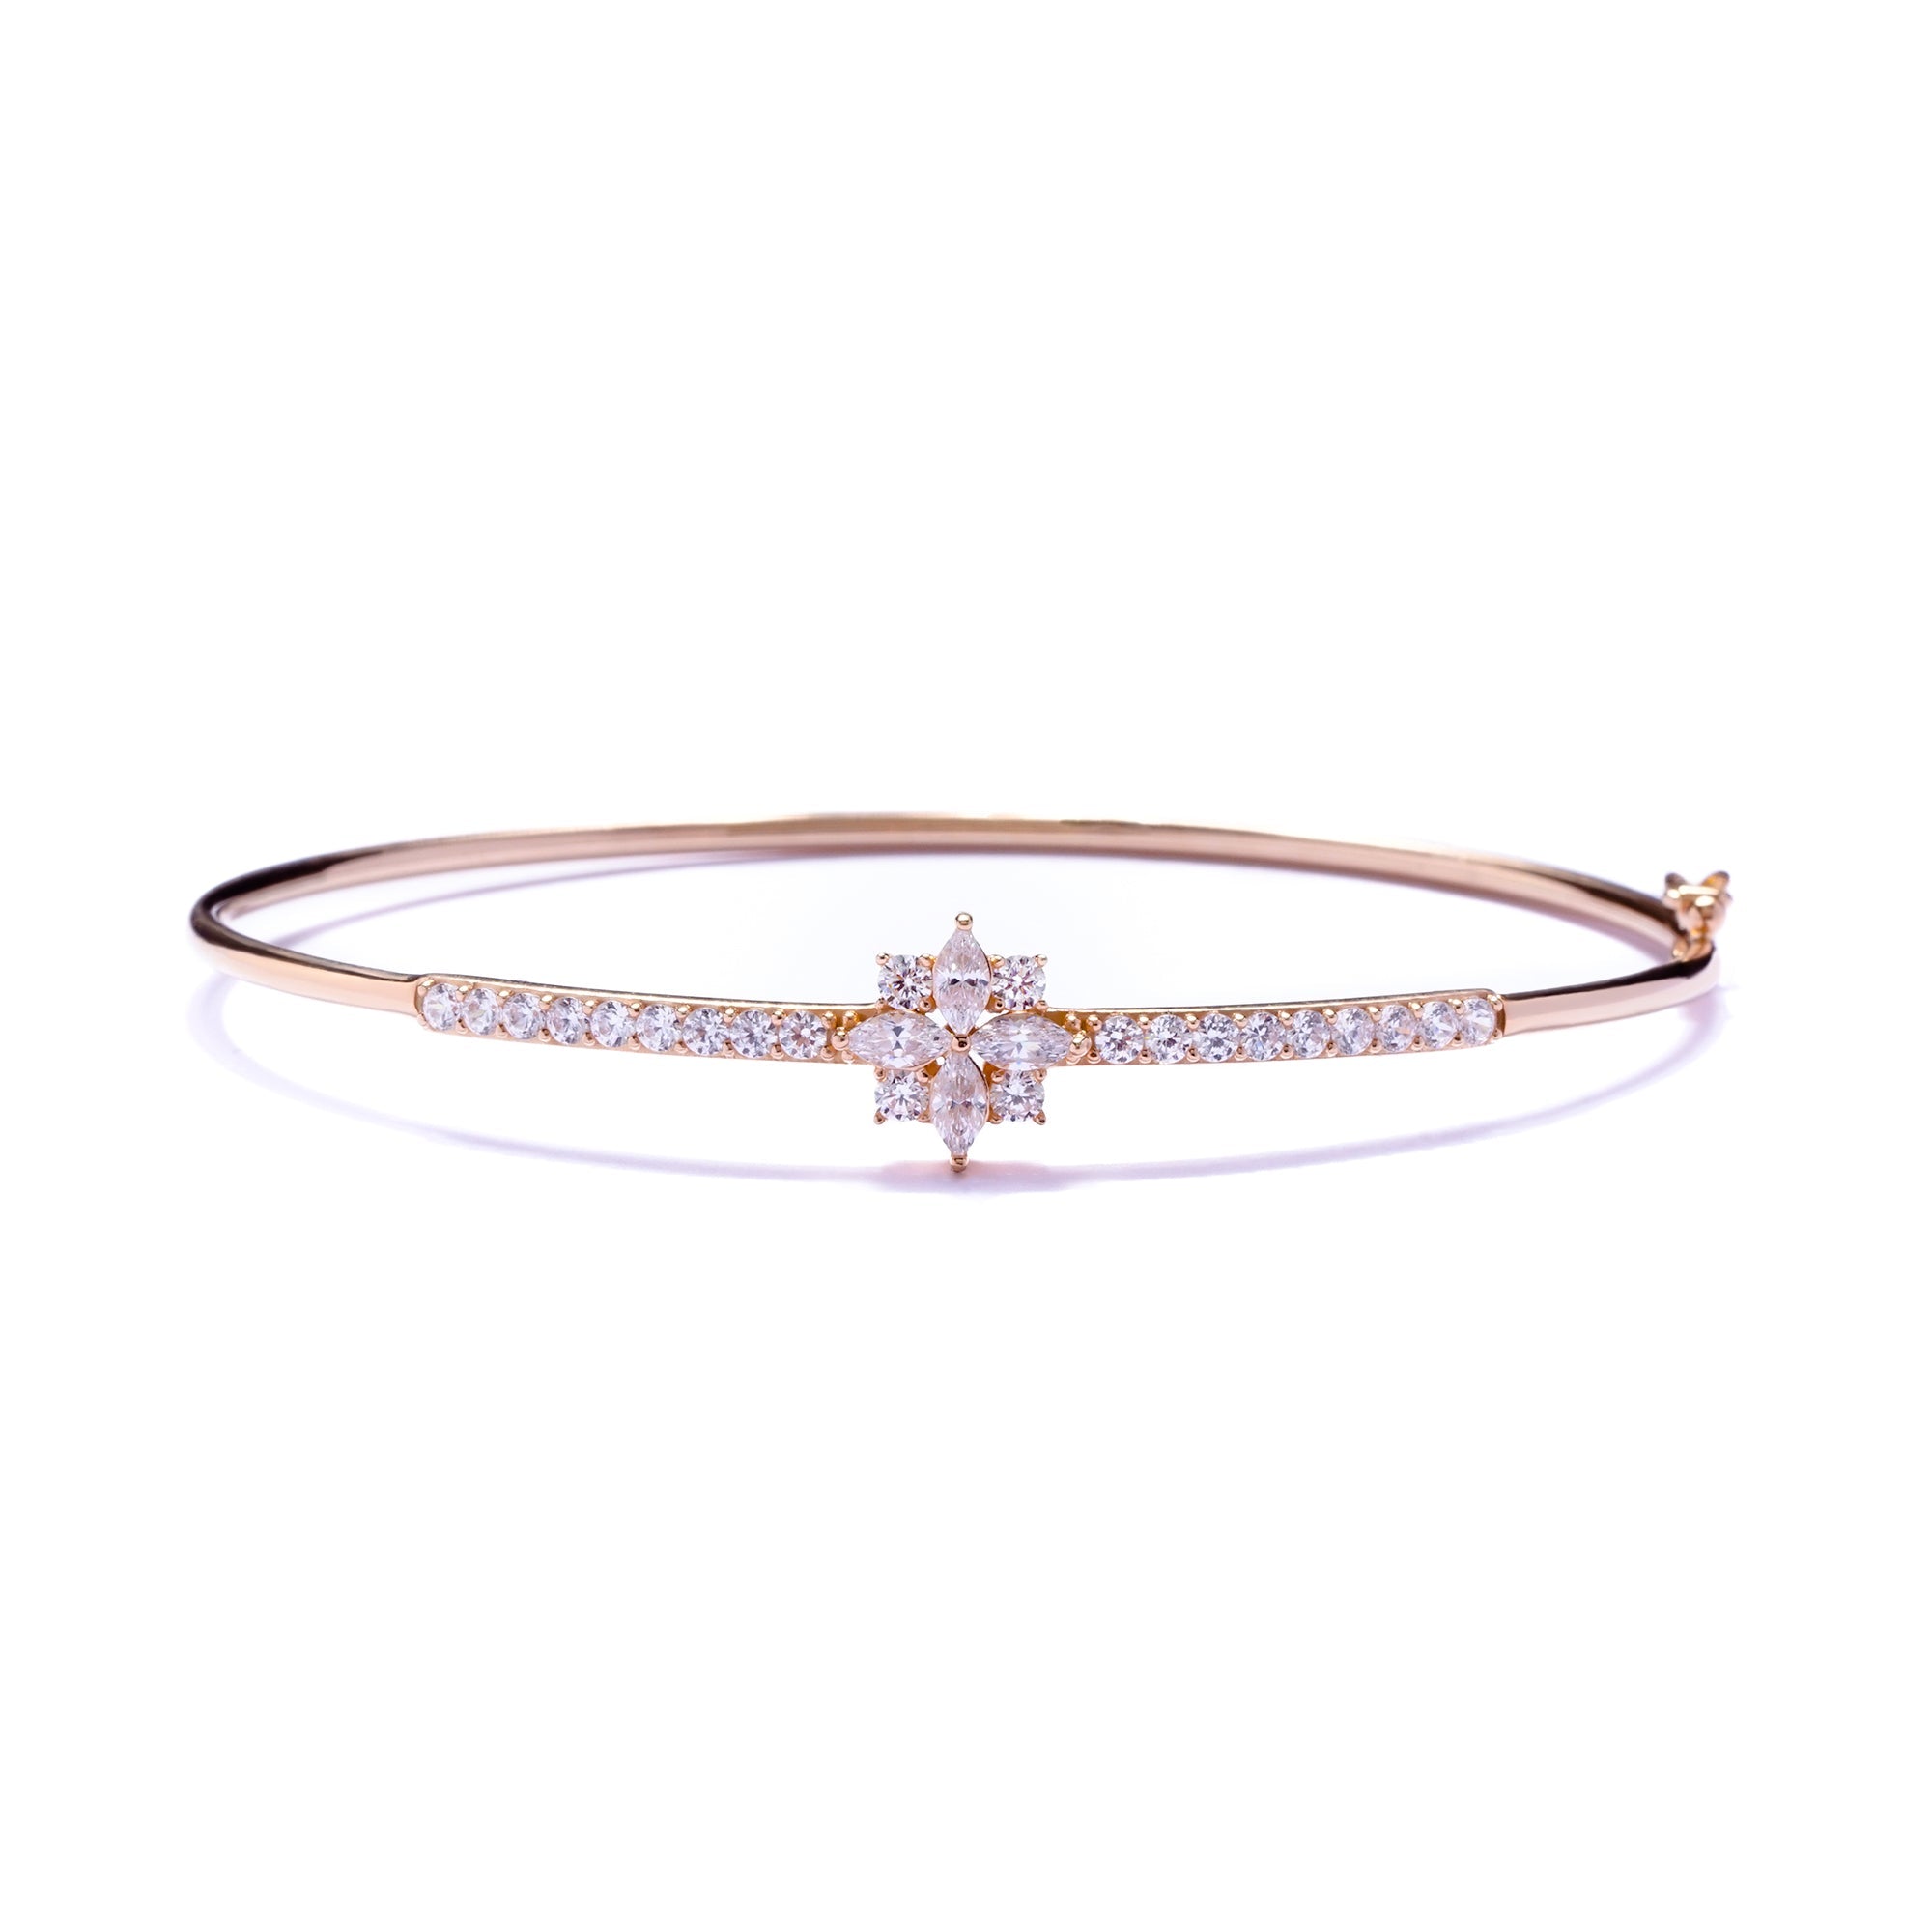 Ailsa Gold Bangle - Sparkle & Joy - Juene Jewelry